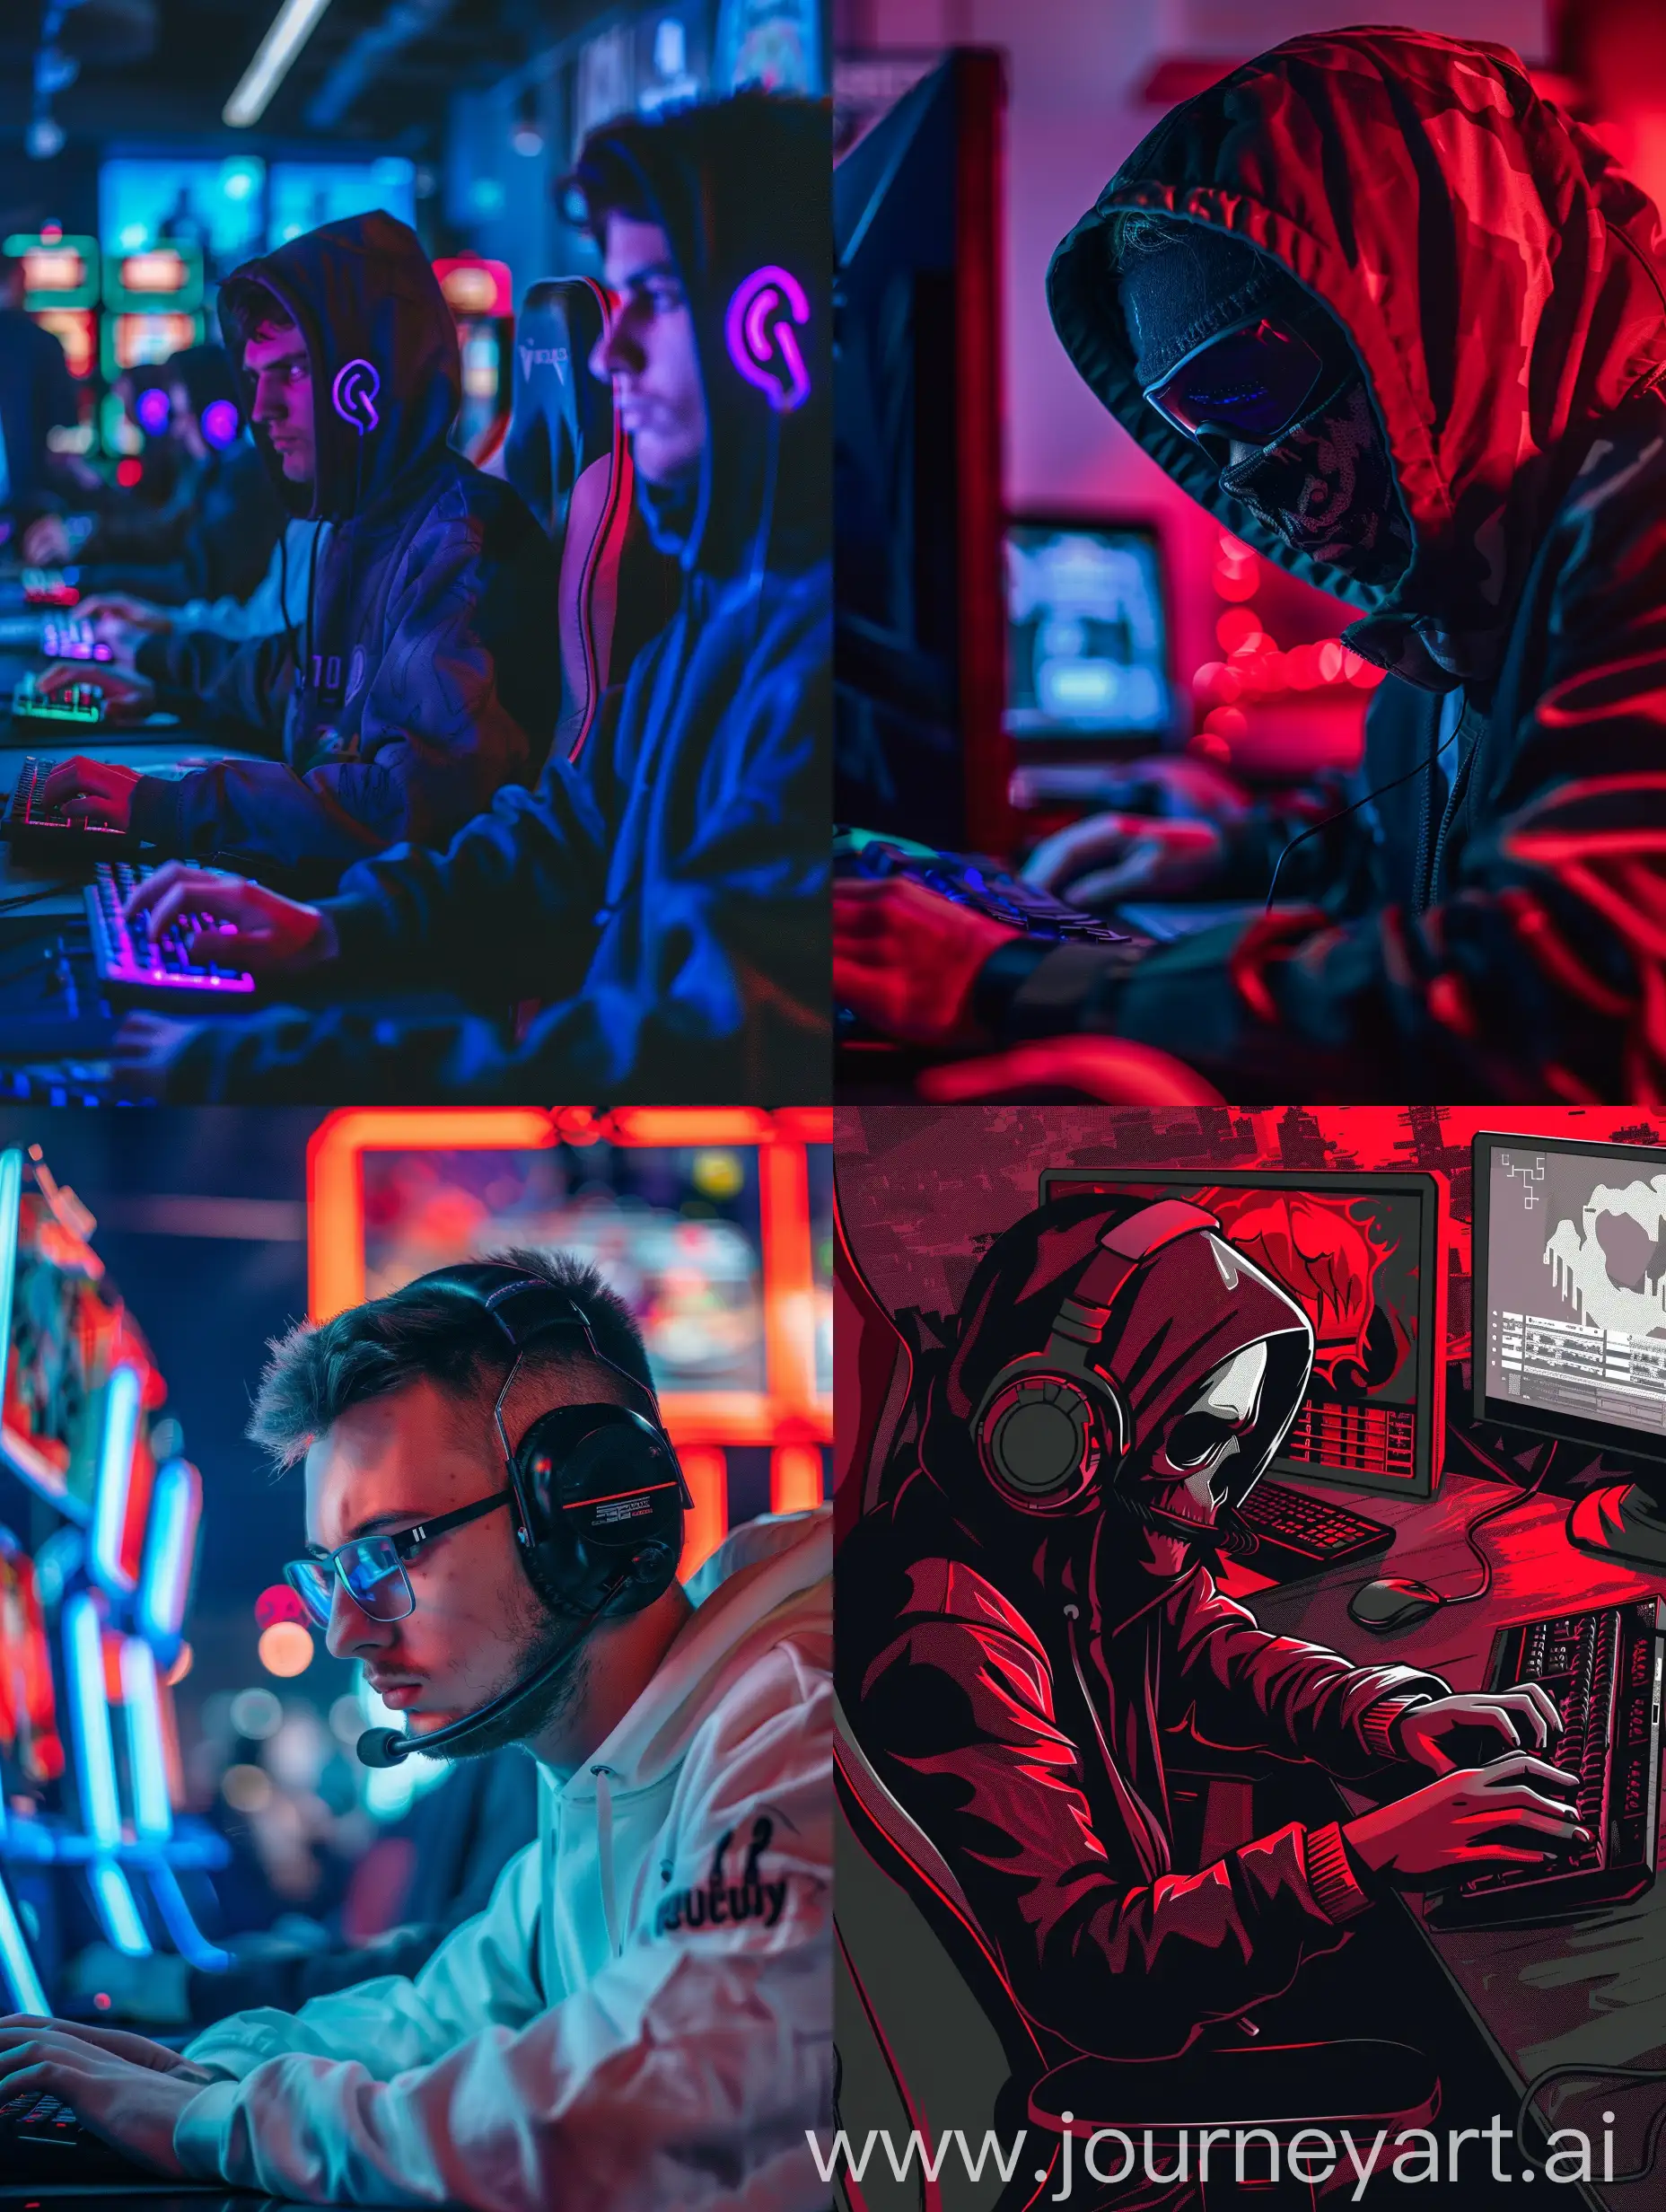 Intense-Cybersport-Action-Counter-Strike-2-Gambling-Match